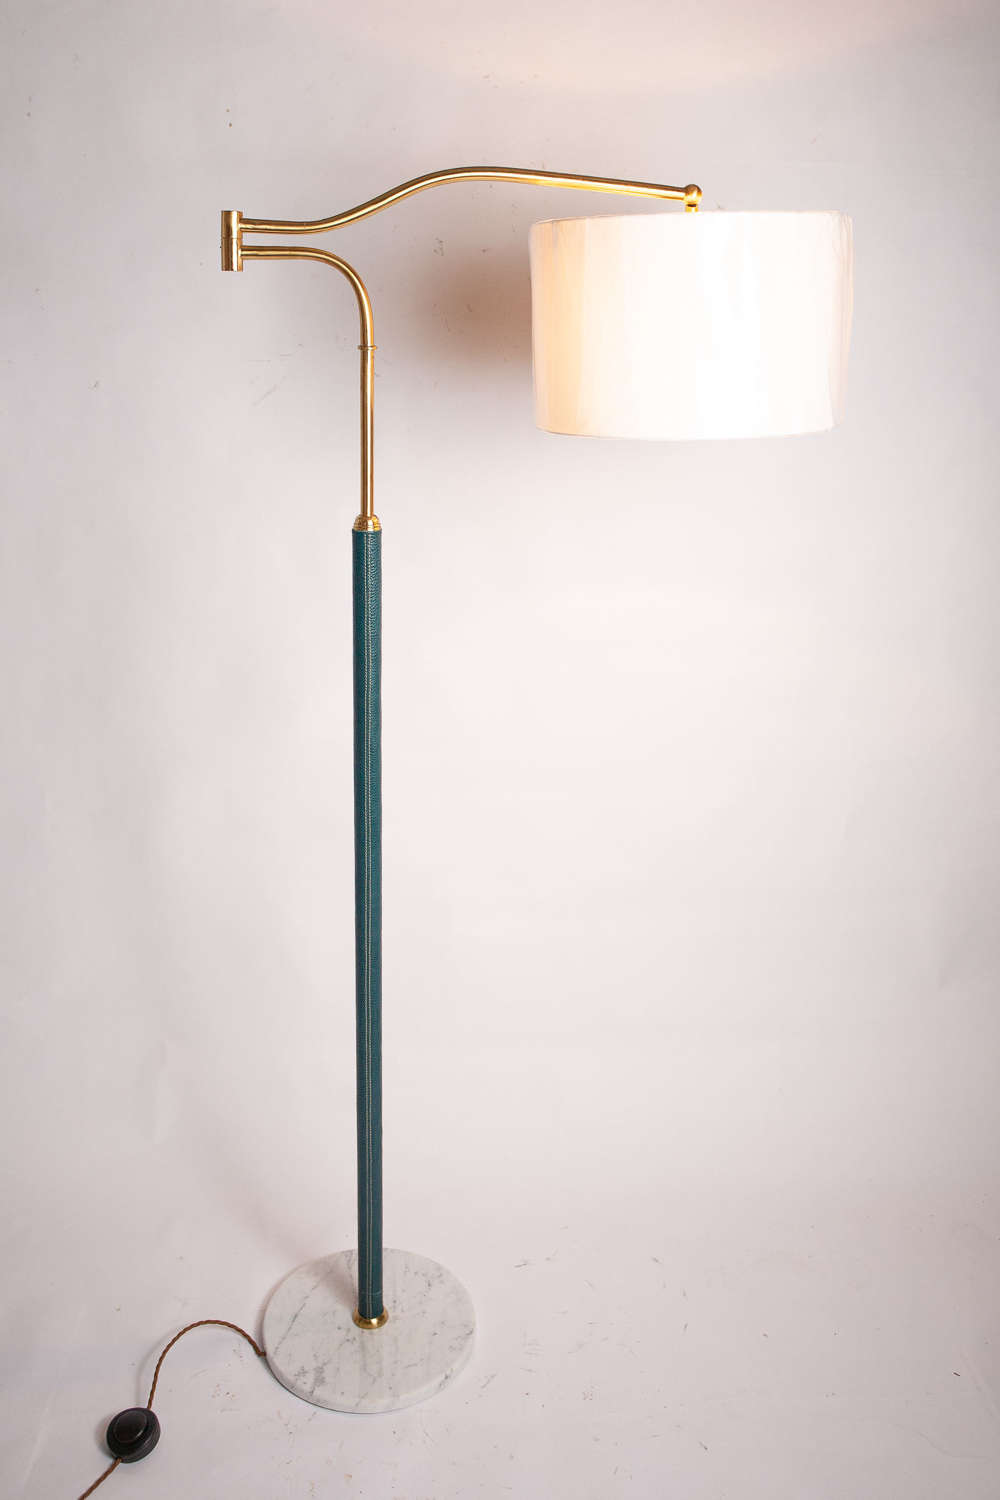 An Italian Swing Arm Telescopic Green Floor Lamp